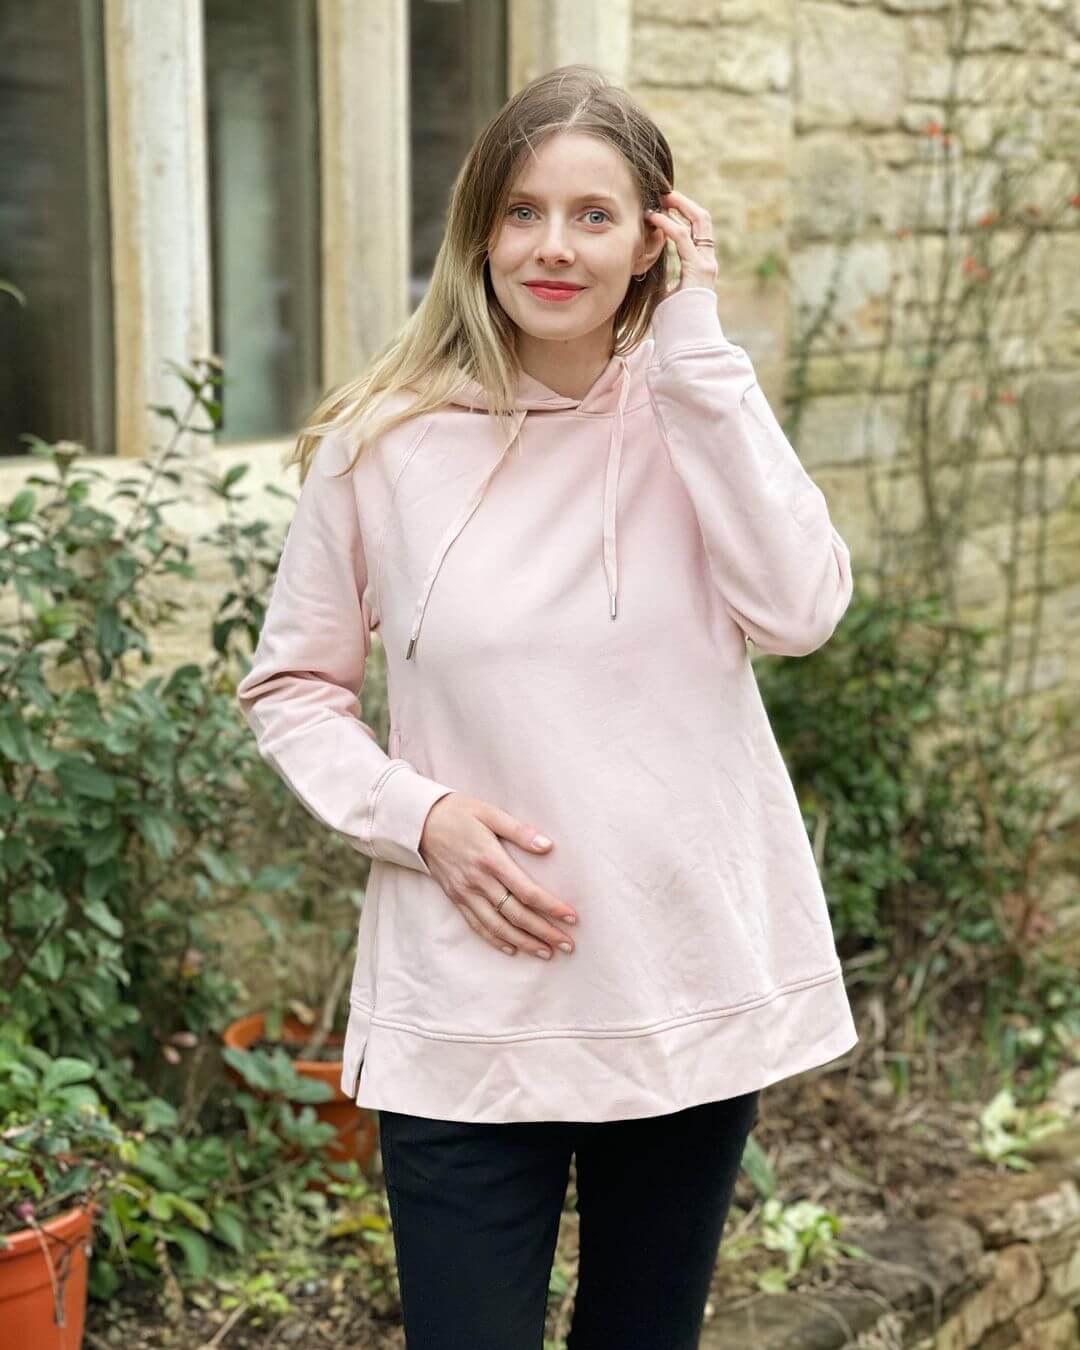 Rachel Hurd Wood Glows in Maternity Wear by Isabella Oliver